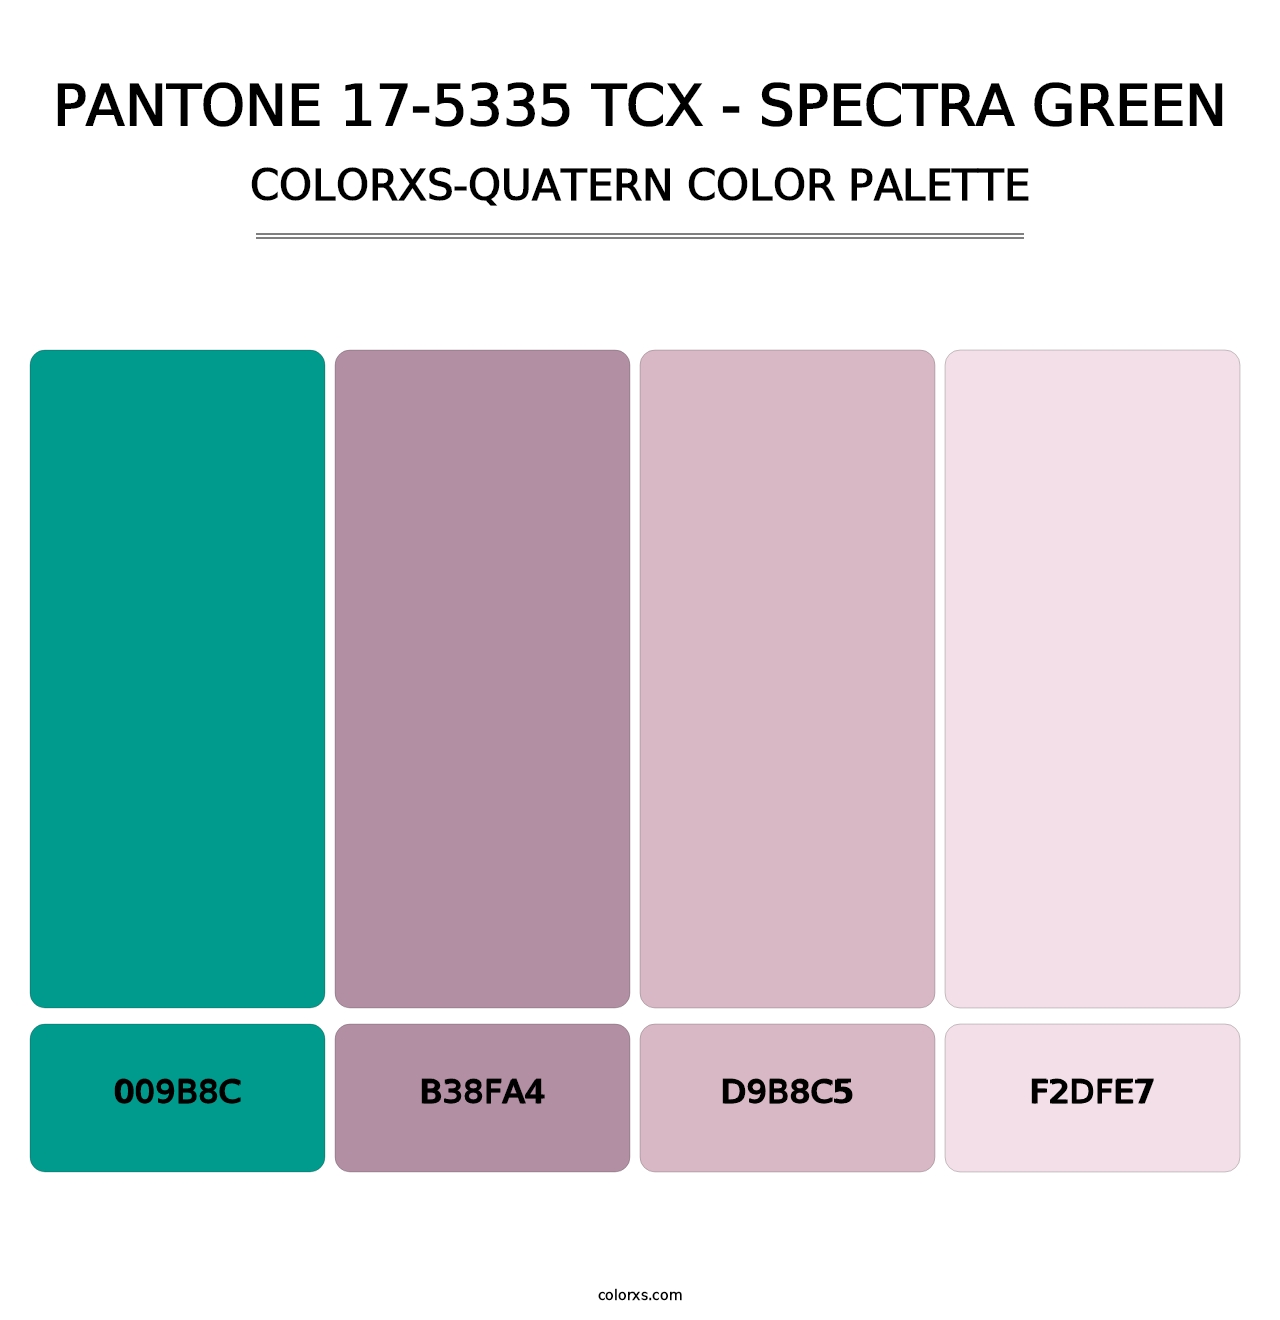 PANTONE 17-5335 TCX - Spectra Green - Colorxs Quatern Palette